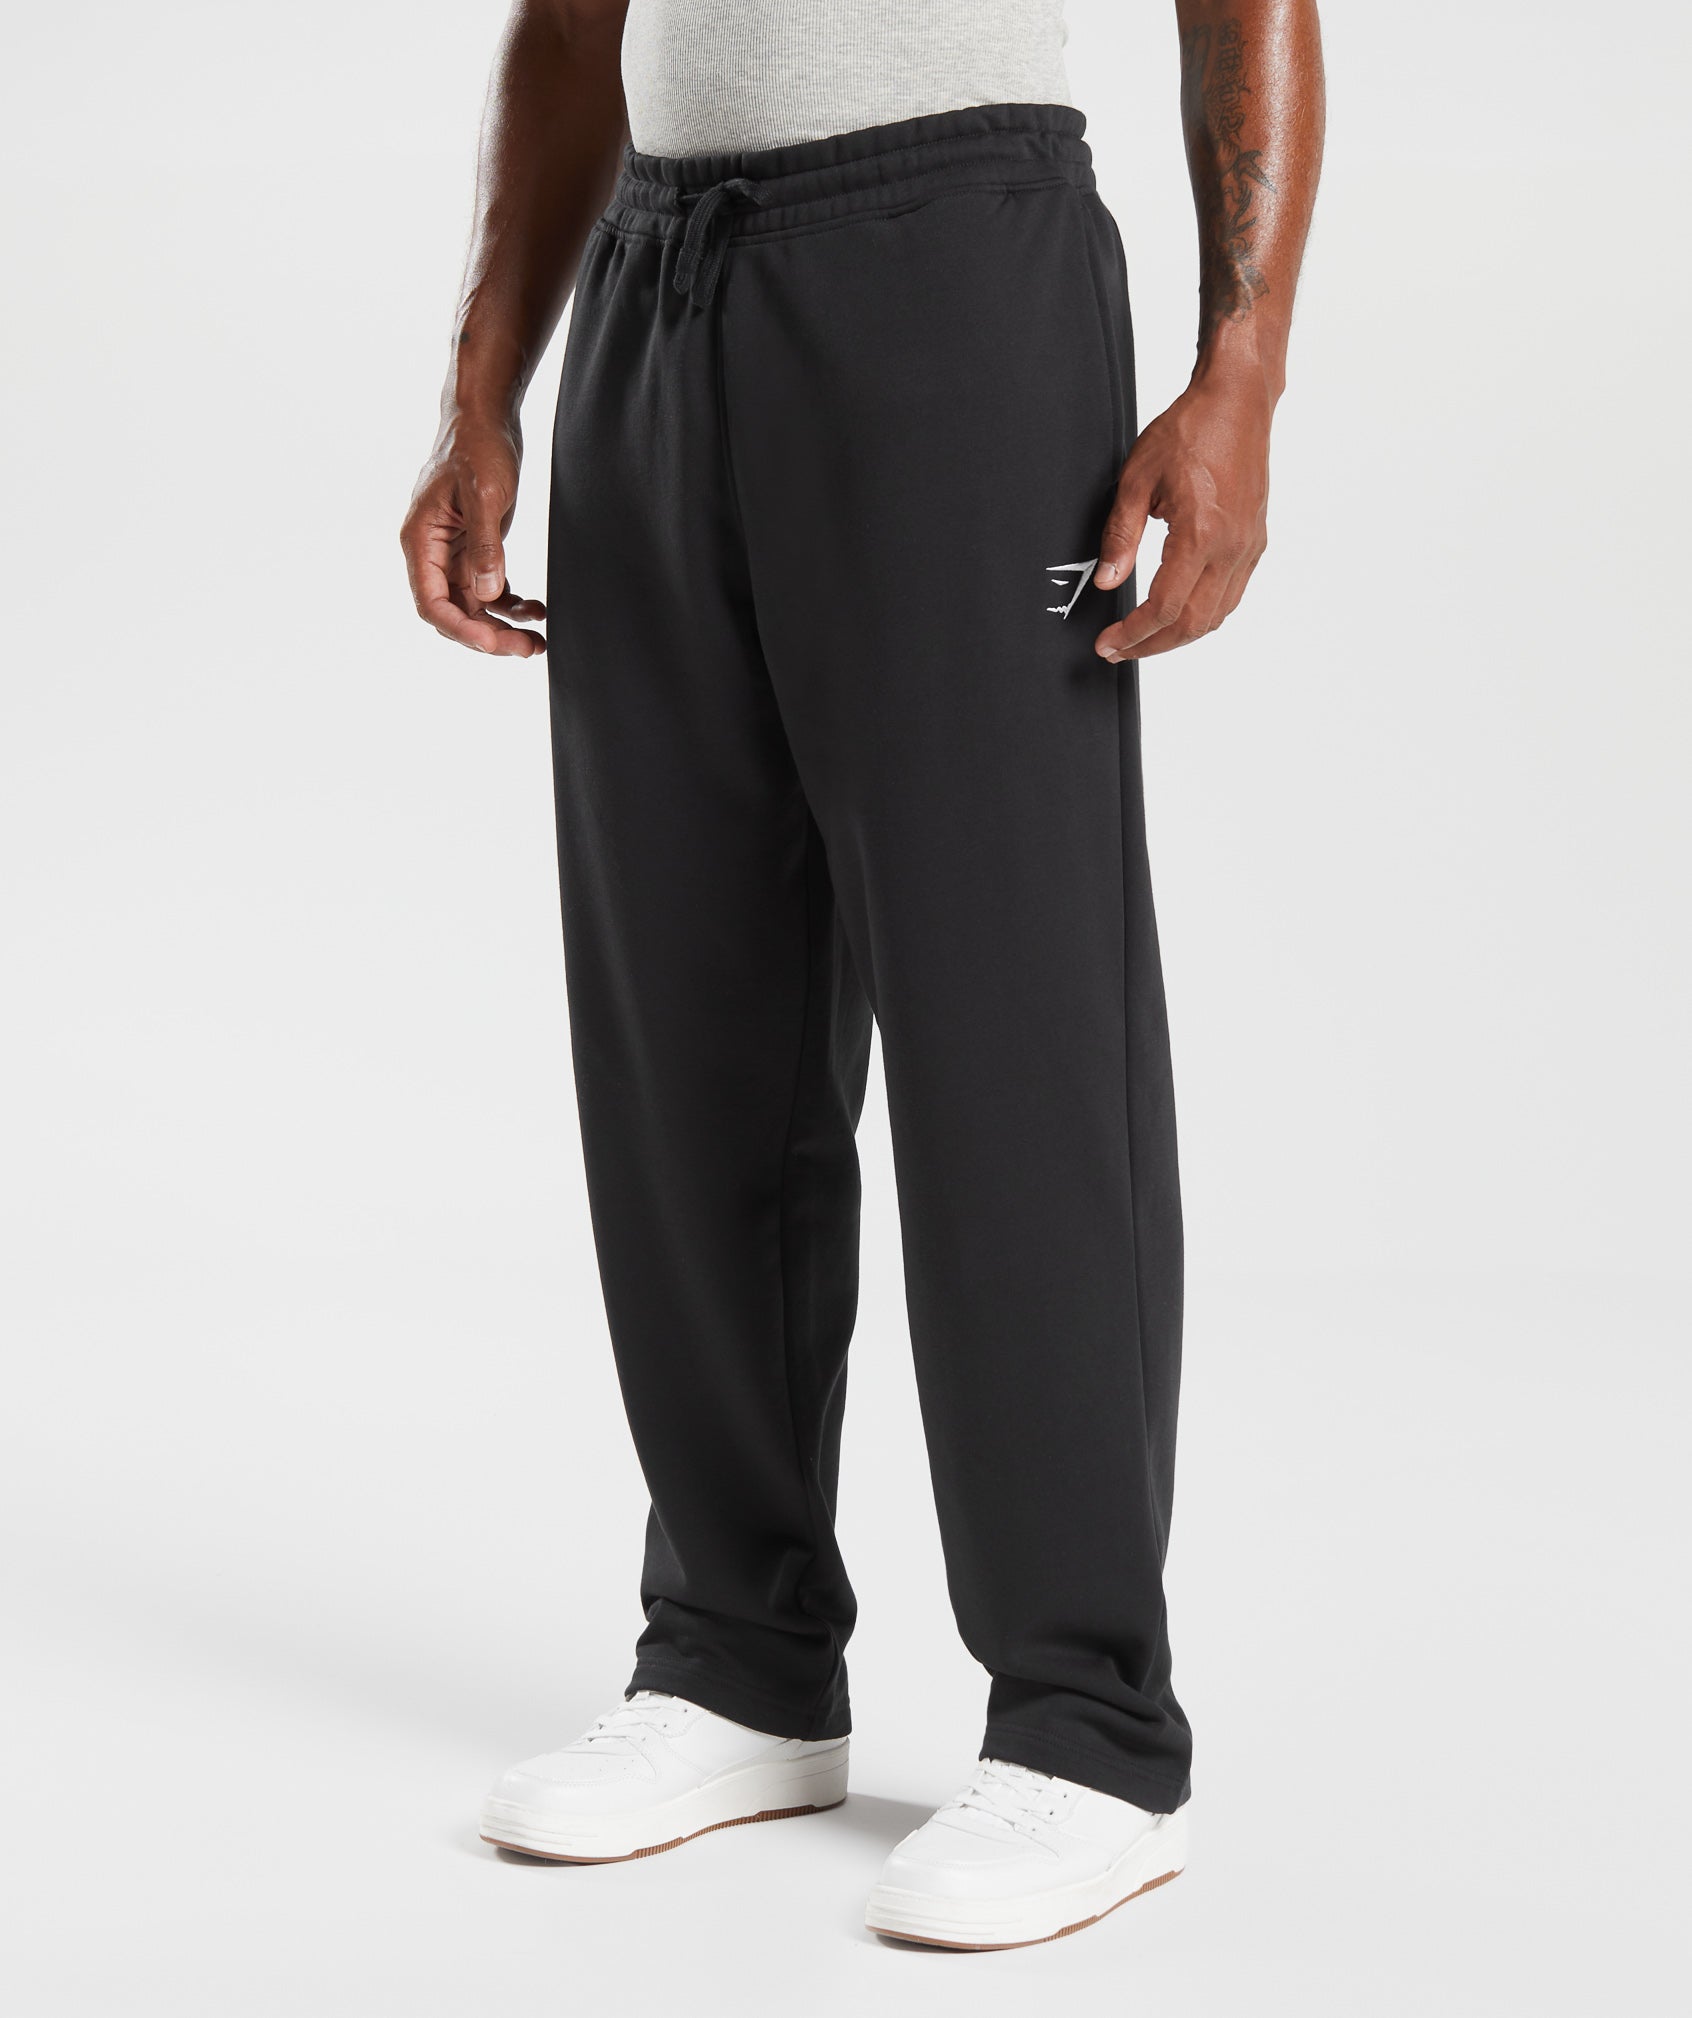 Men's Black Sweatpants & Black Joggers